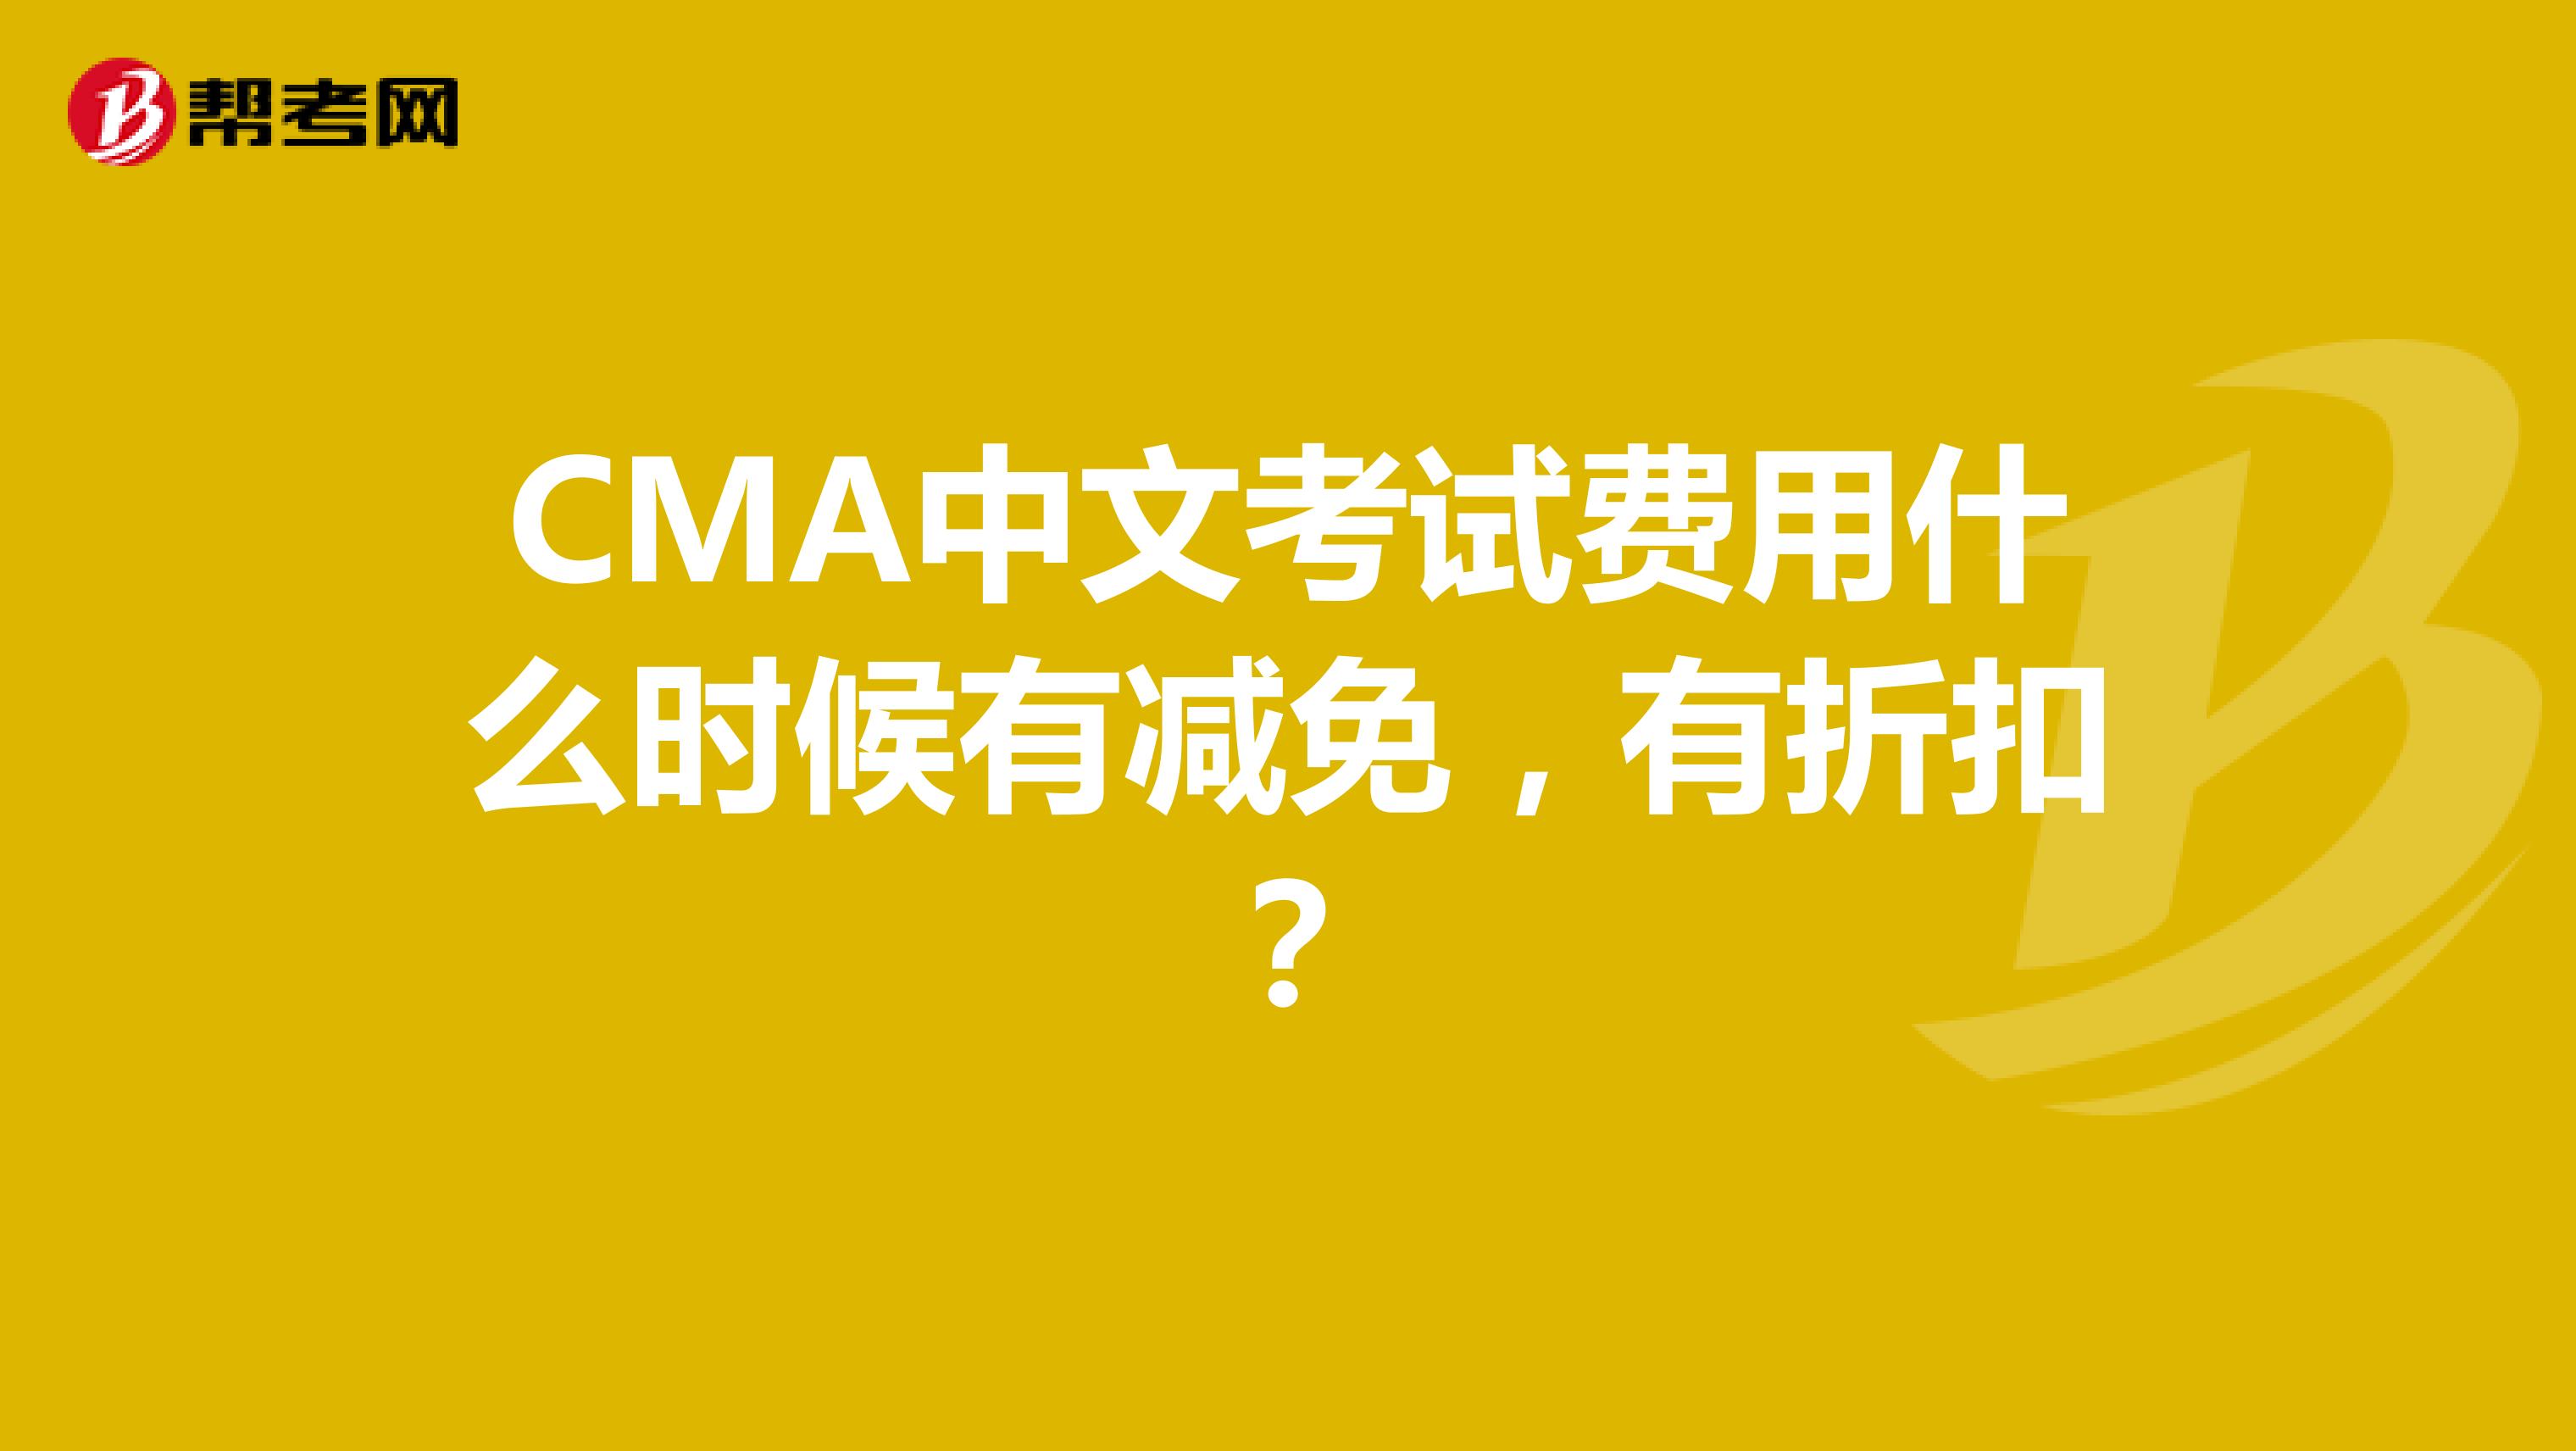 CMA中文考试费用什么时候有减免，有折扣？